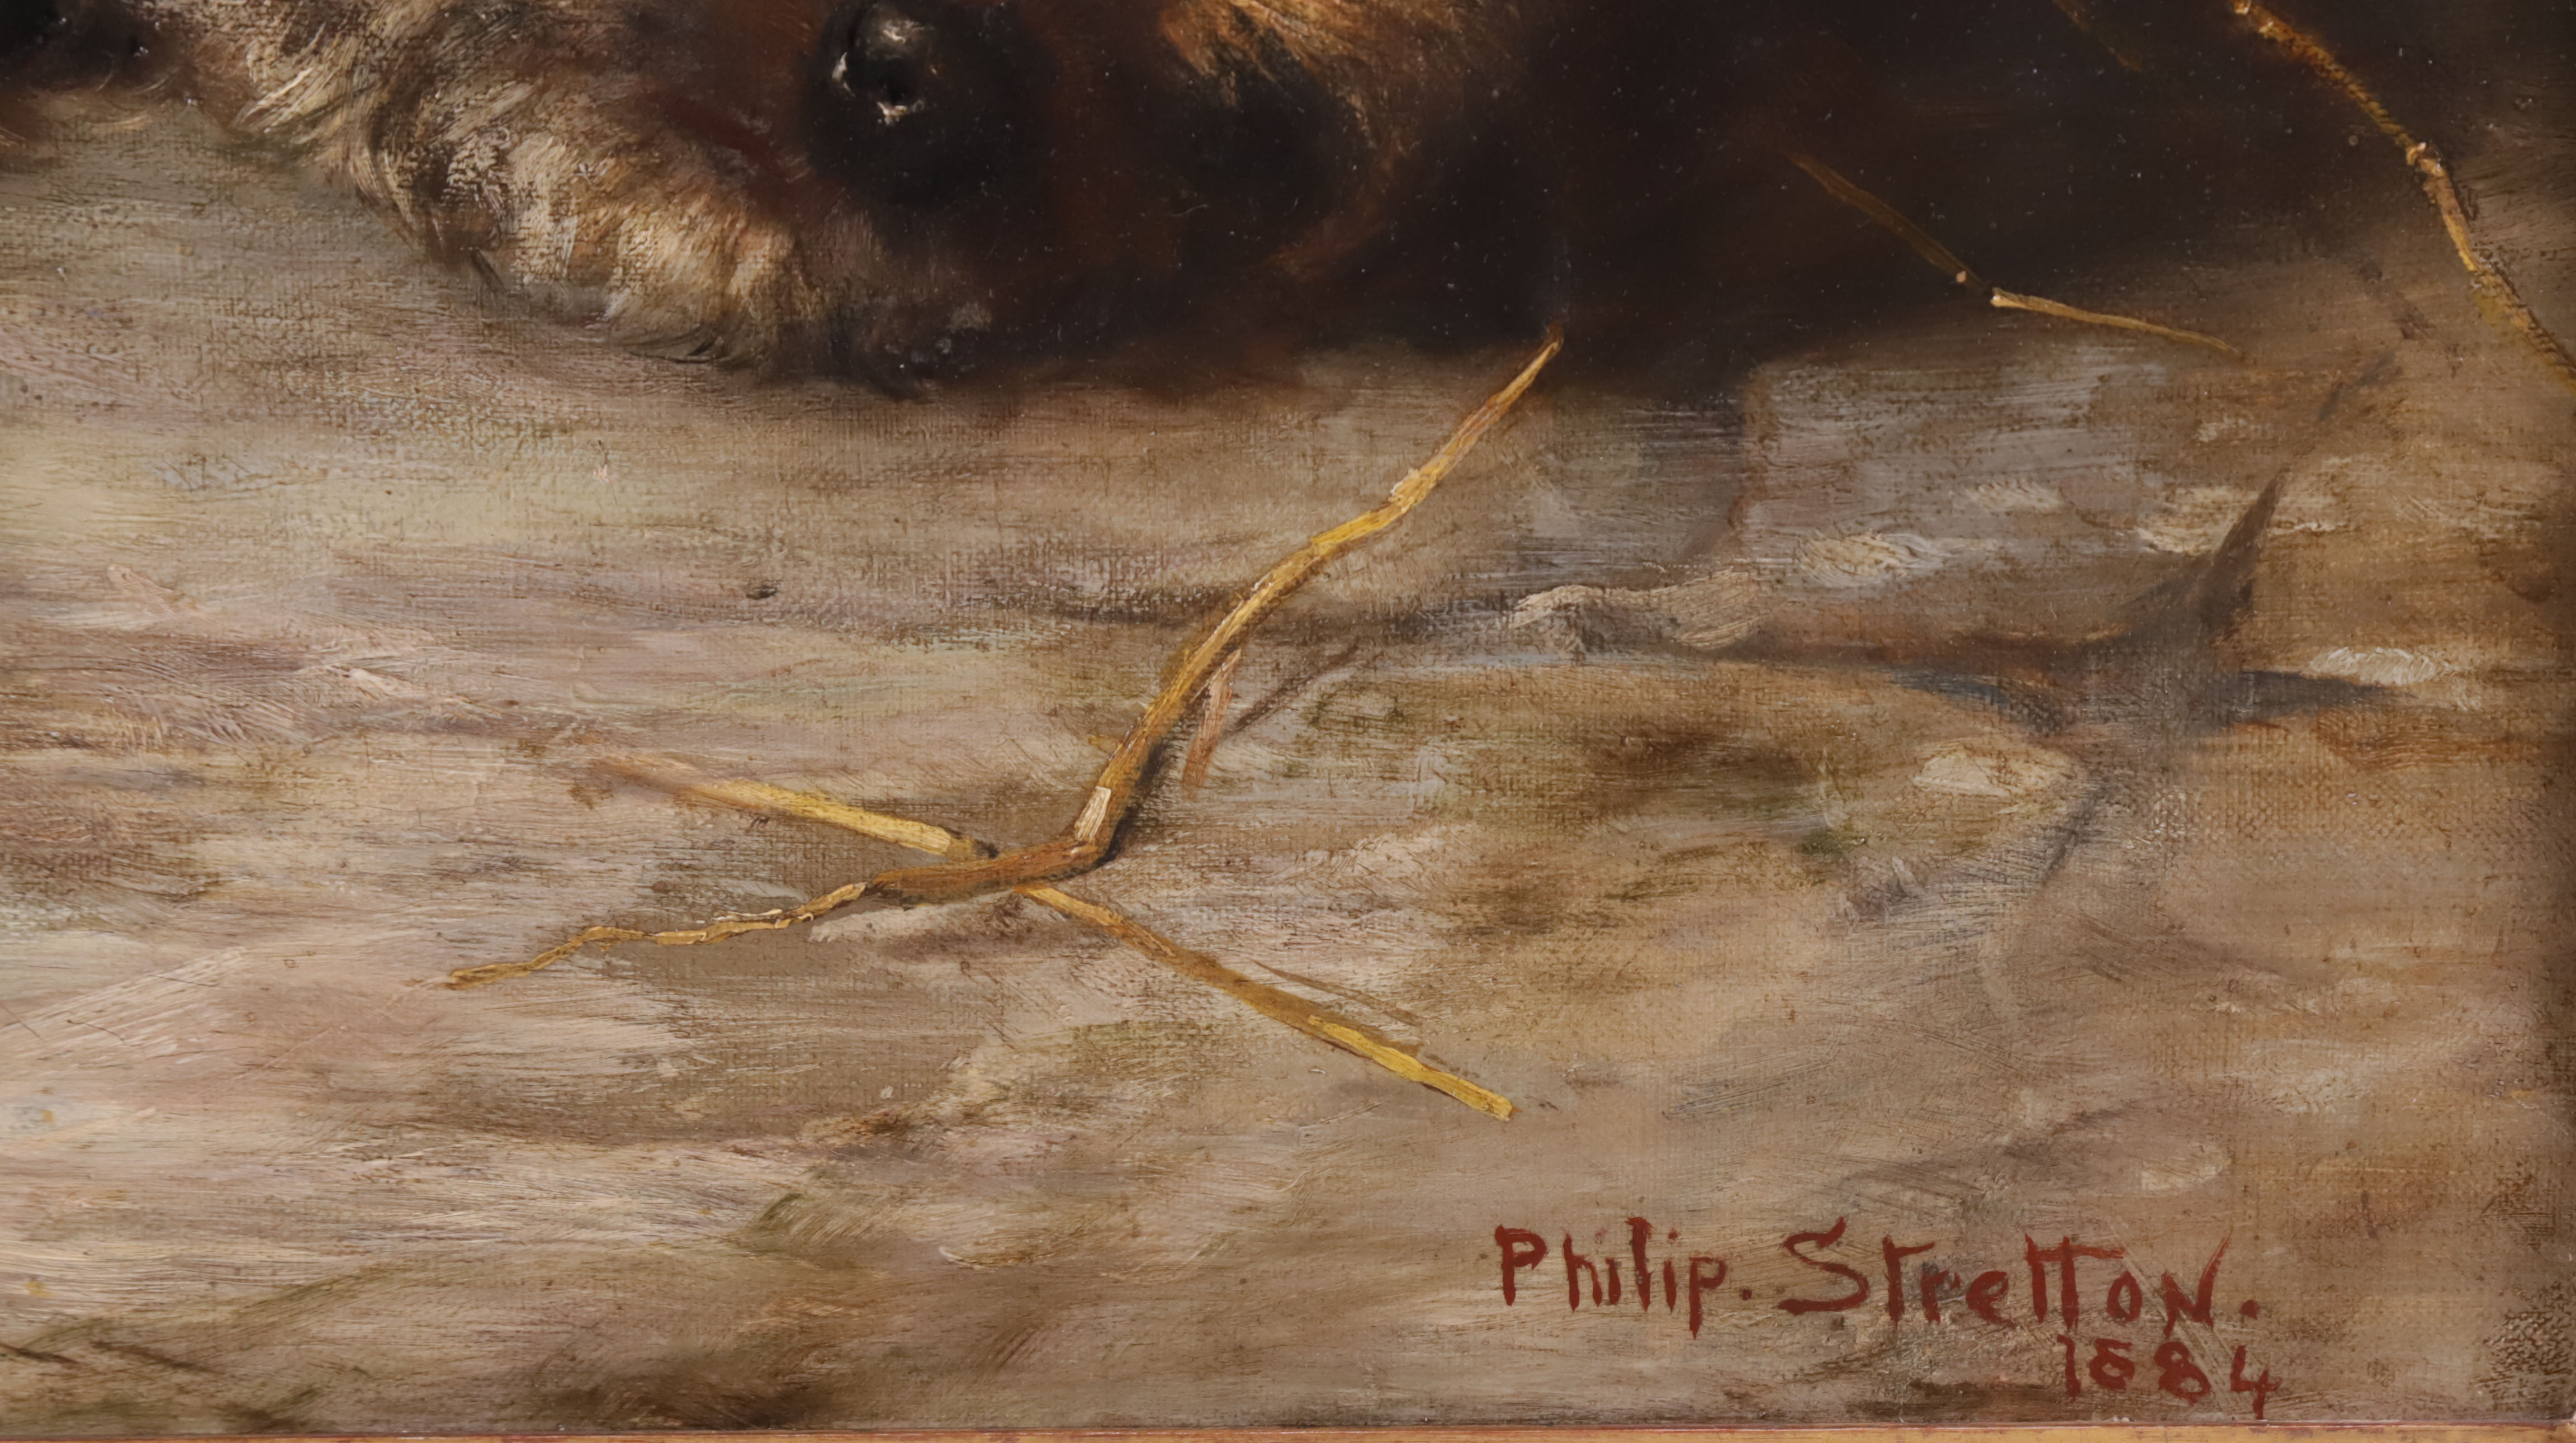 Phillip Eustare Stretton Oil on Canvas “A Dandie Dinmont Terrier”